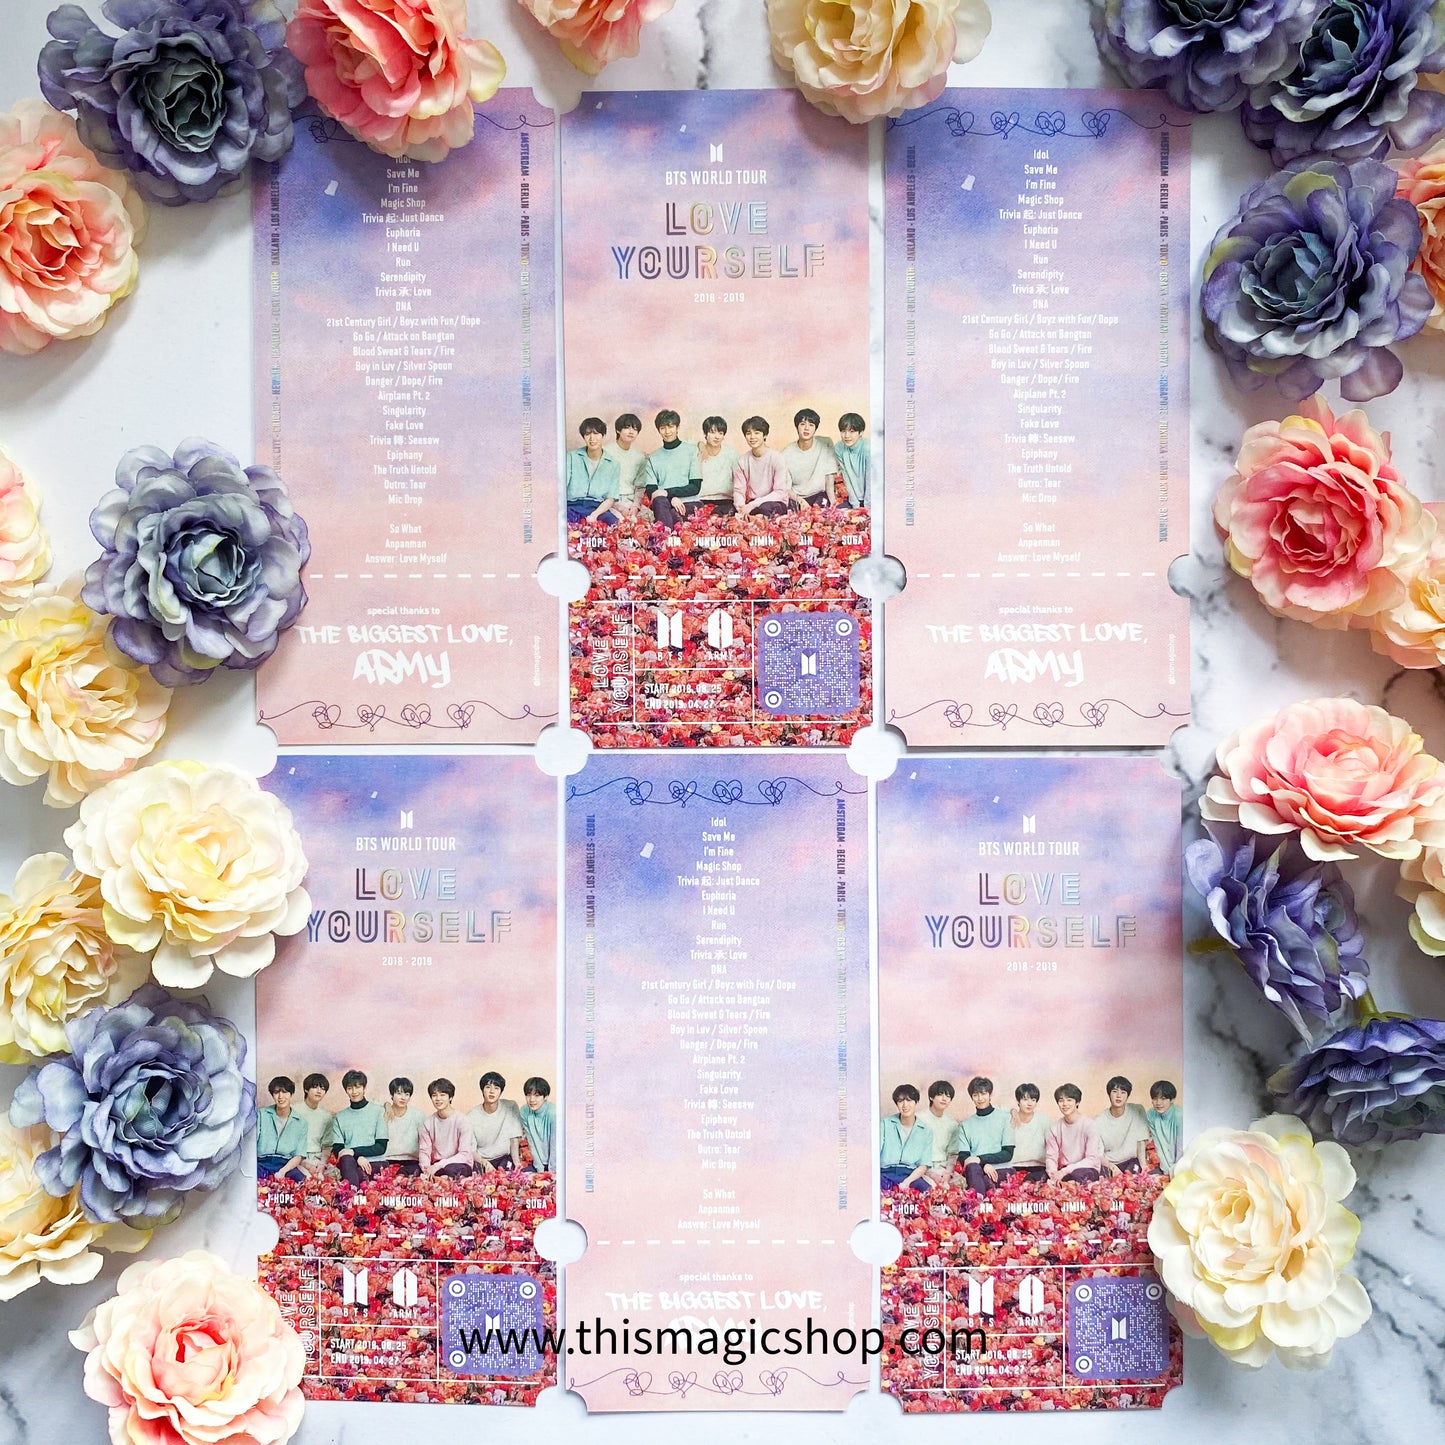 BTS CONCERT TICKET love yourself lys world tour commemorative ticket memorabilia